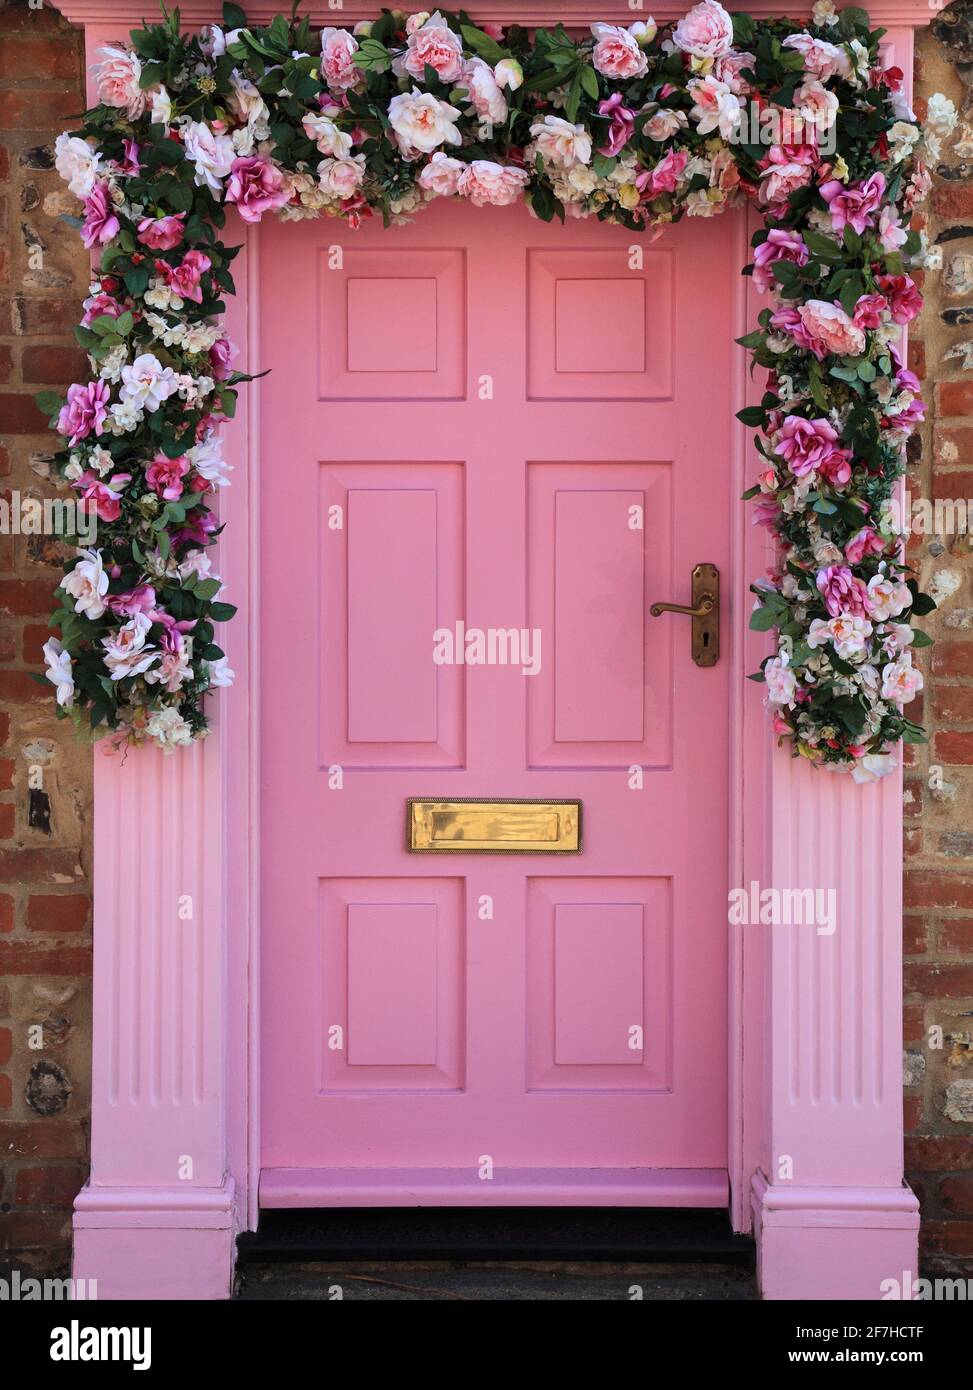 Mable's, Shop Front, Burnham Market, Norfolk, England, UK, decorated, roses Stock Photo